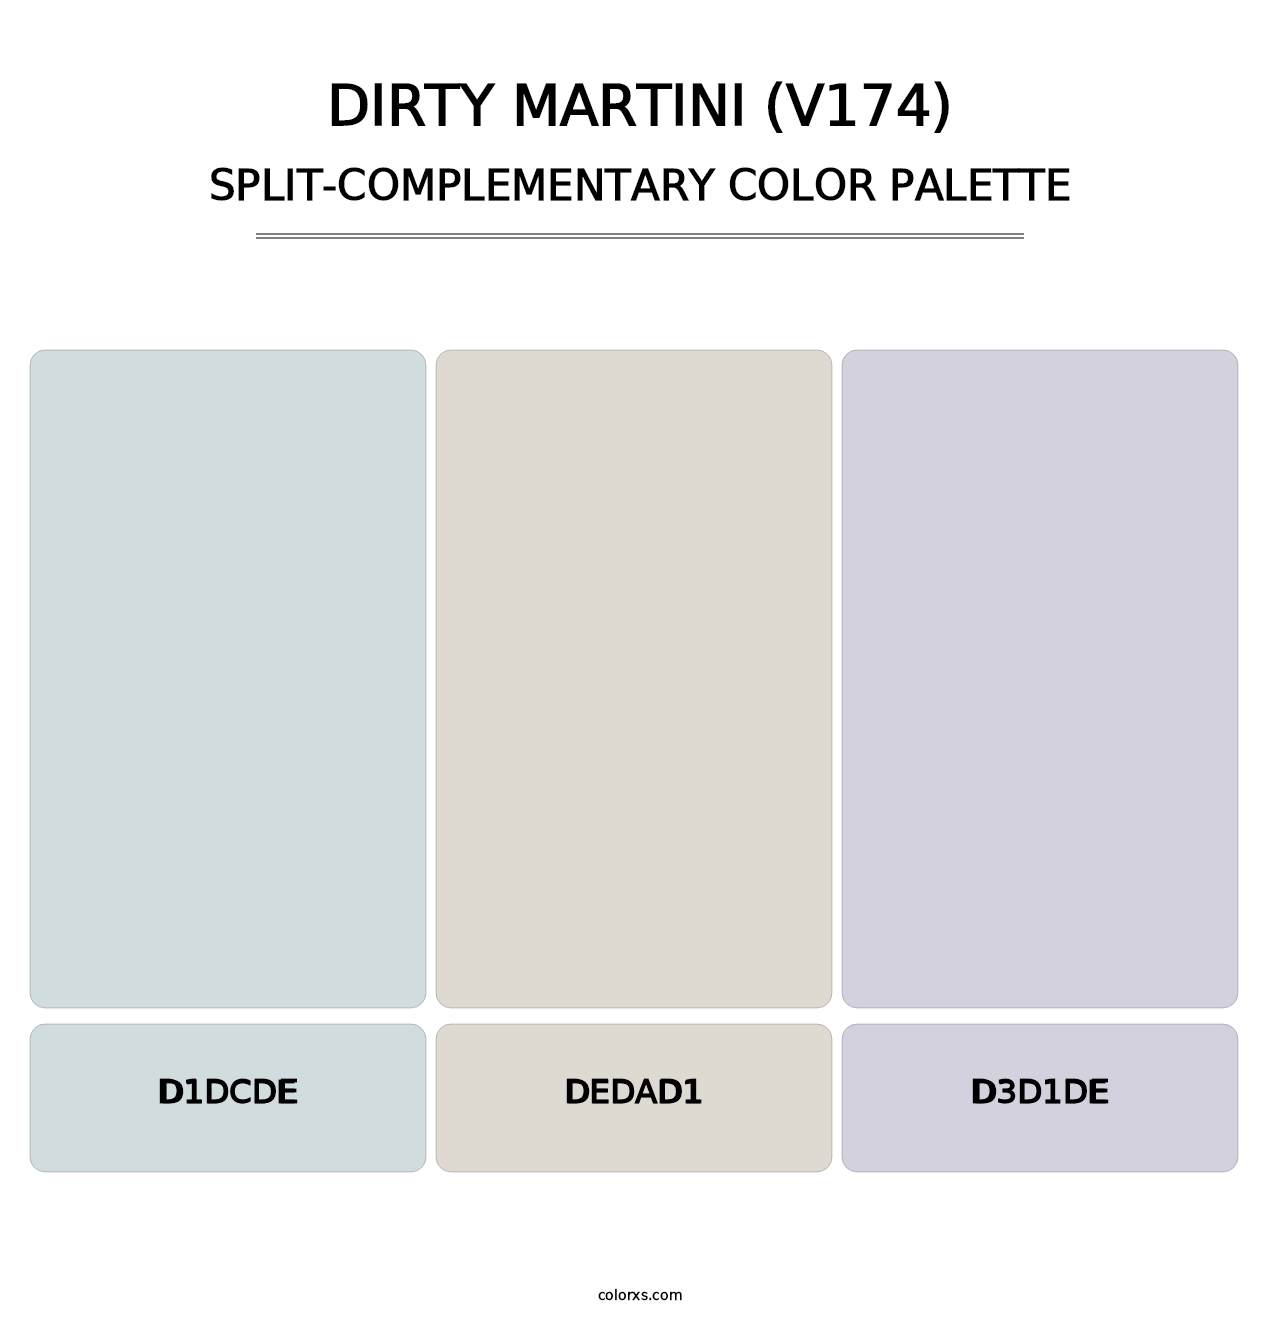 Dirty Martini (V174) - Split-Complementary Color Palette